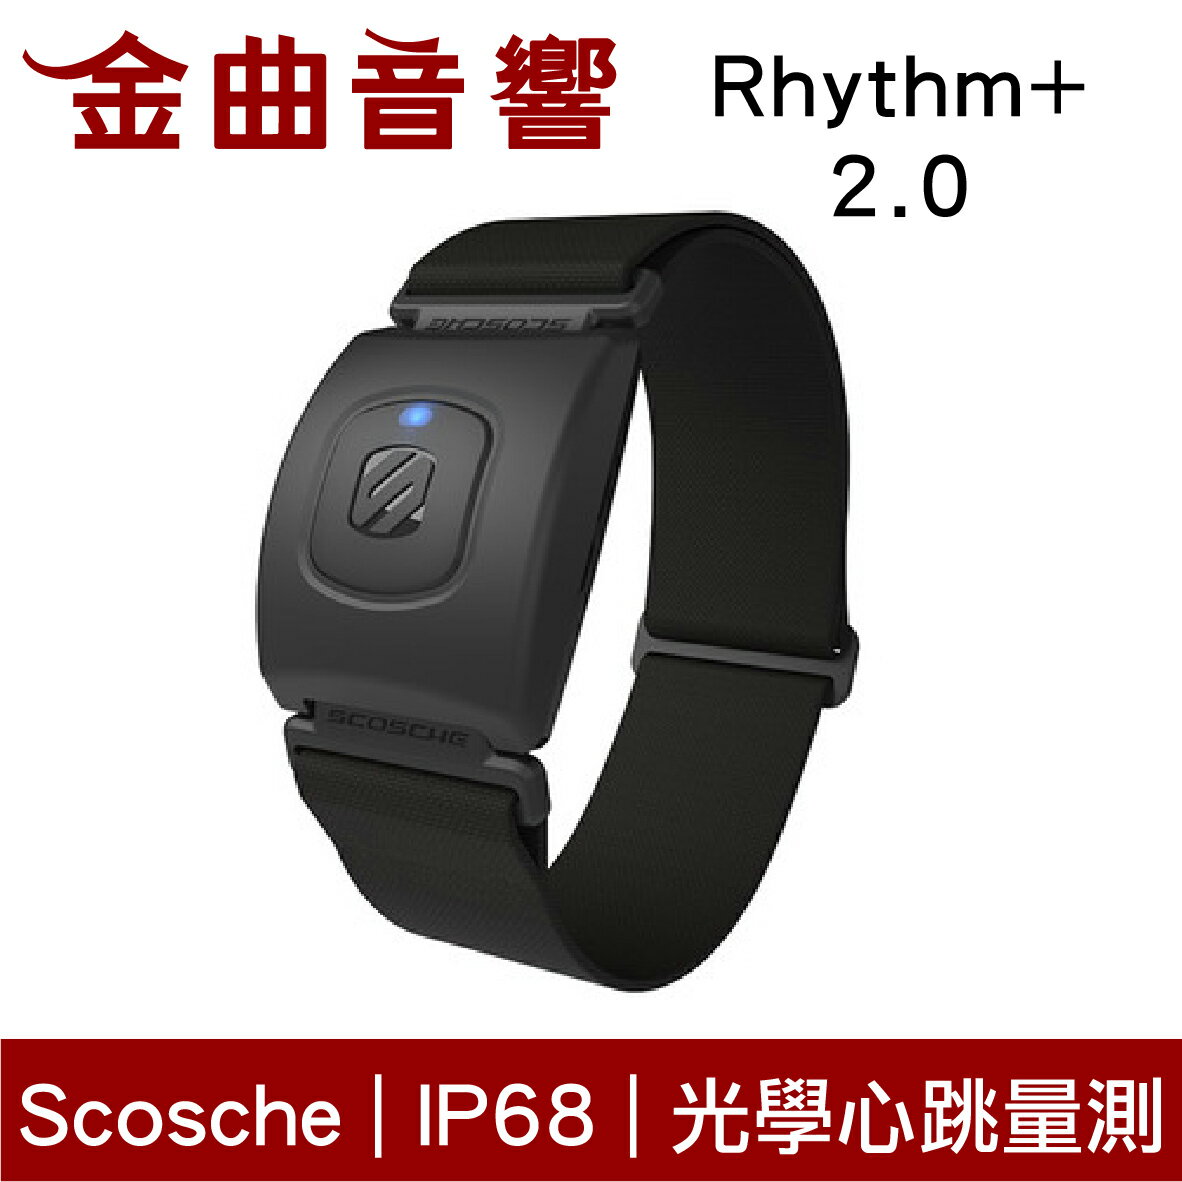 Scosche Rhythm+ 2.0 運動 IP68 24hr續航 光學測量 手臂式心跳帶 | 金曲音響